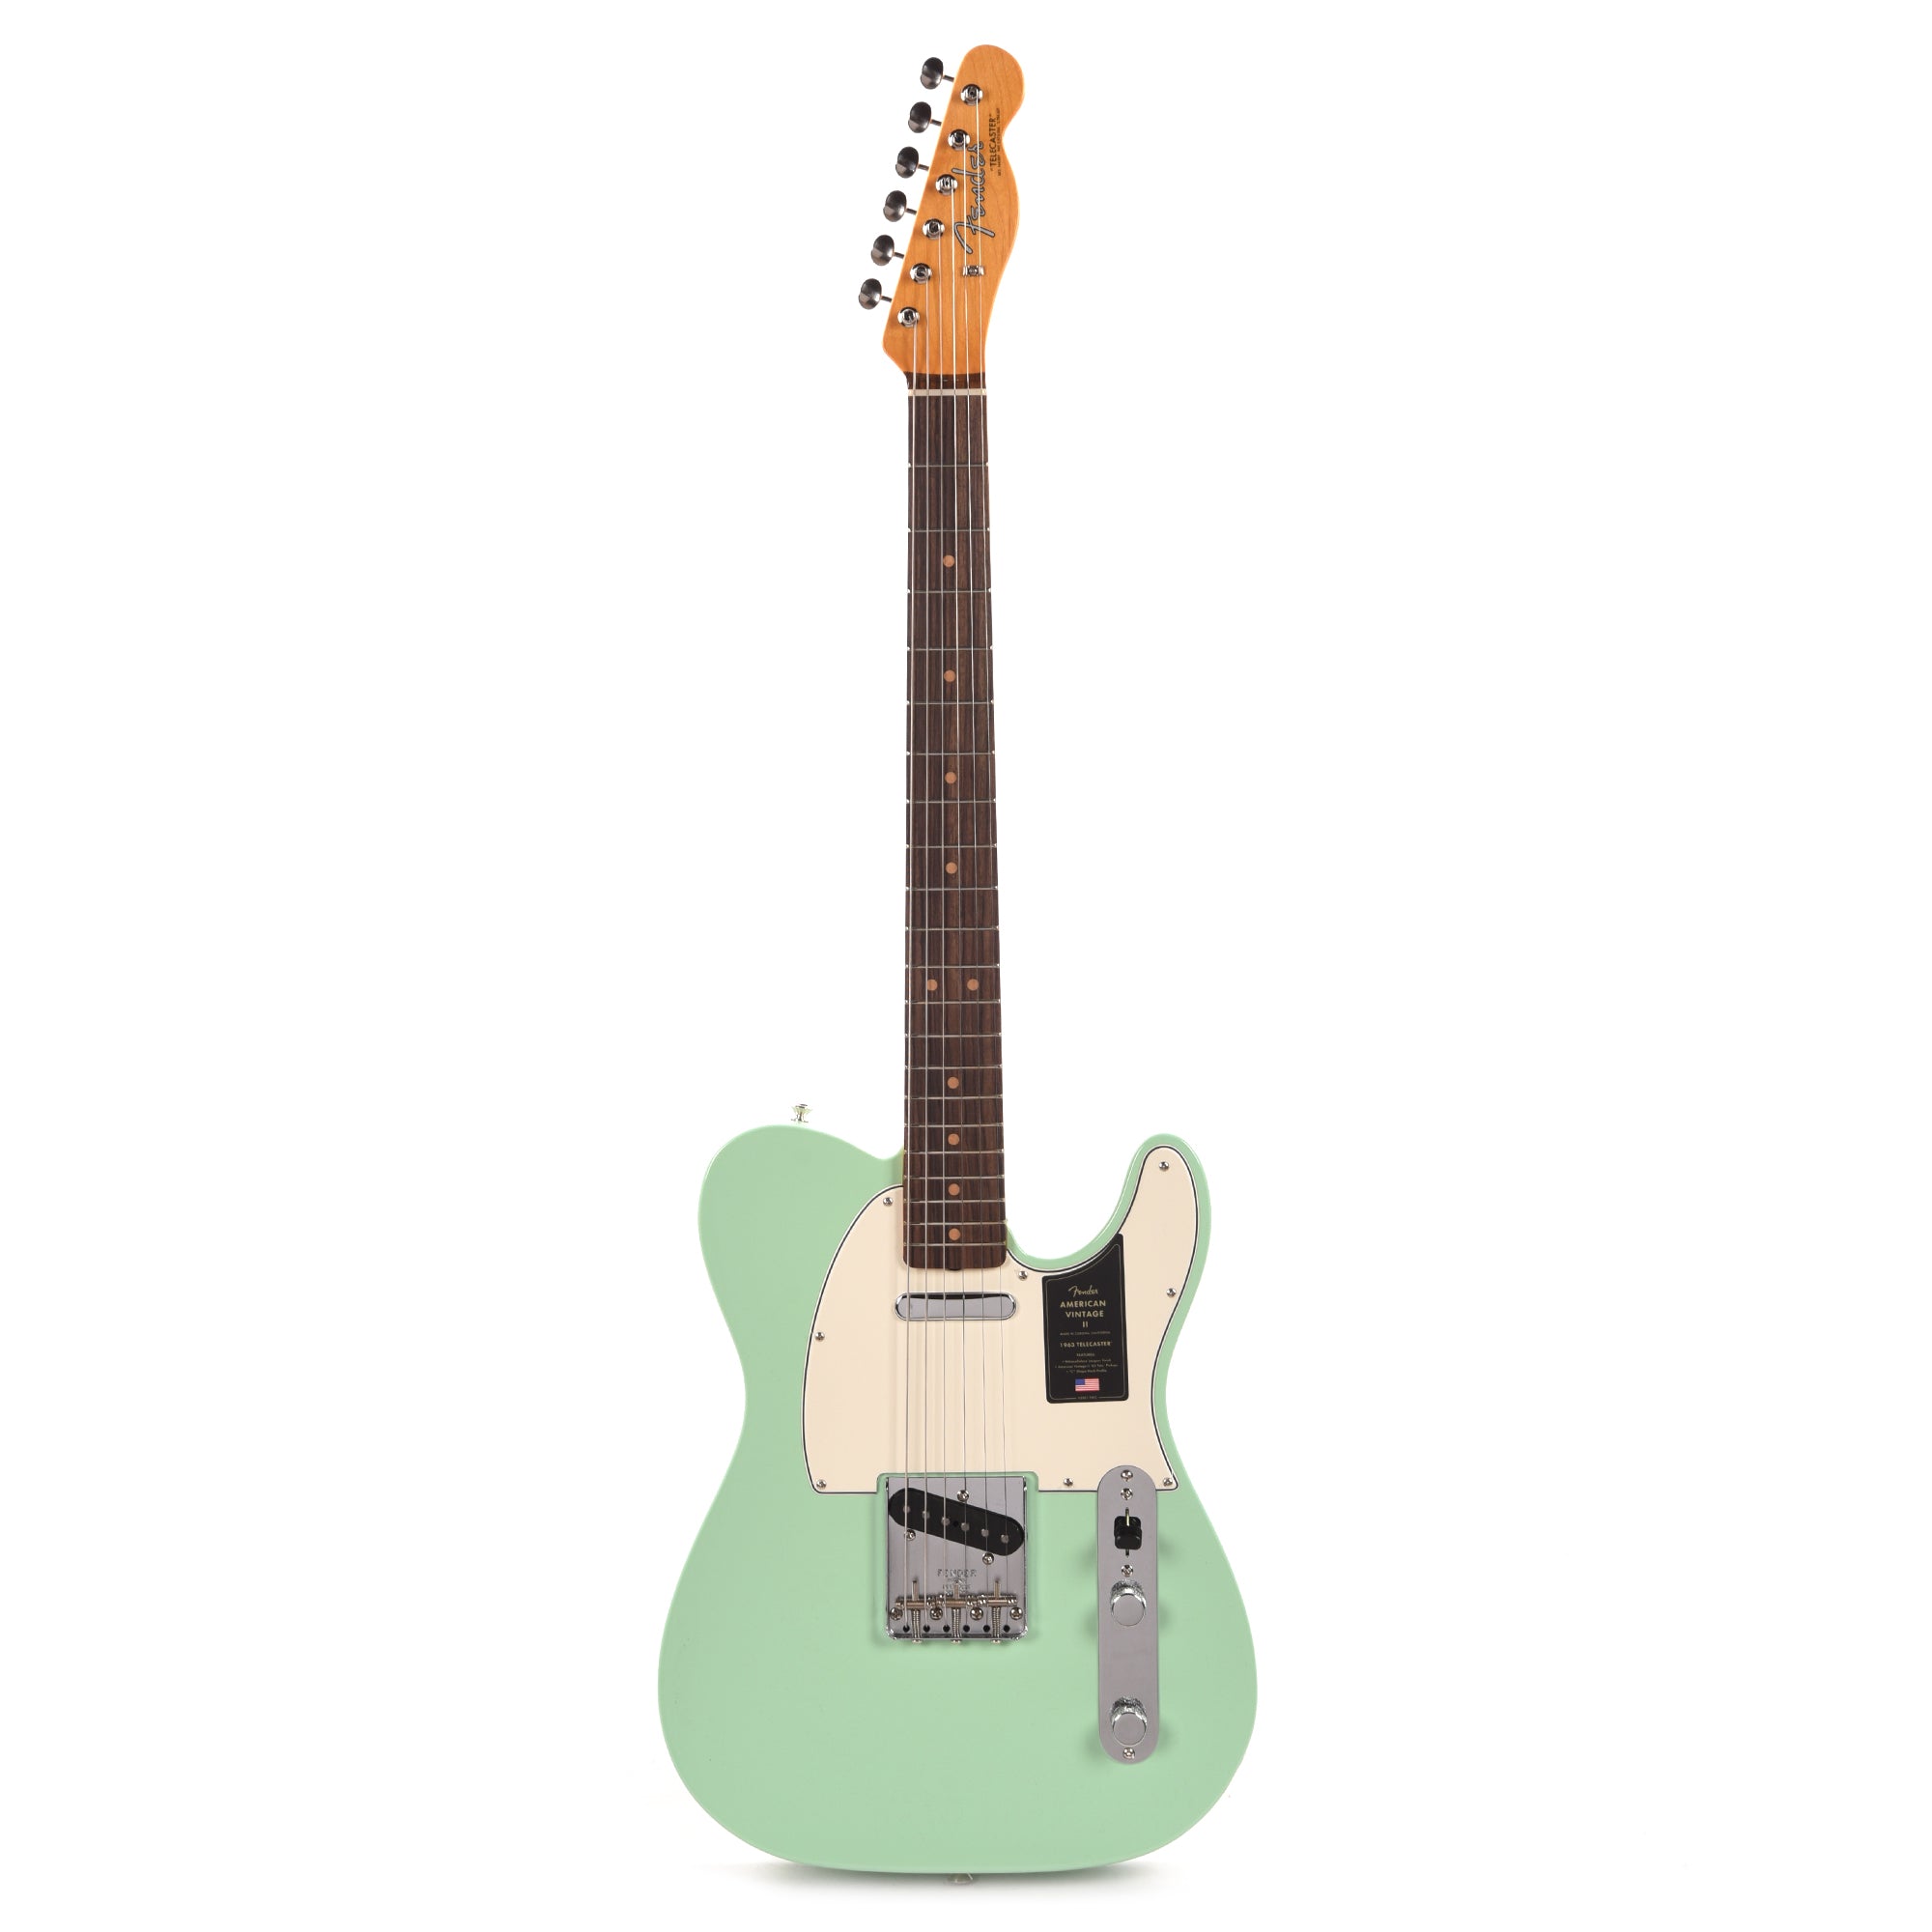 Fender American Vintage II 1963 Telecaster Surf Green